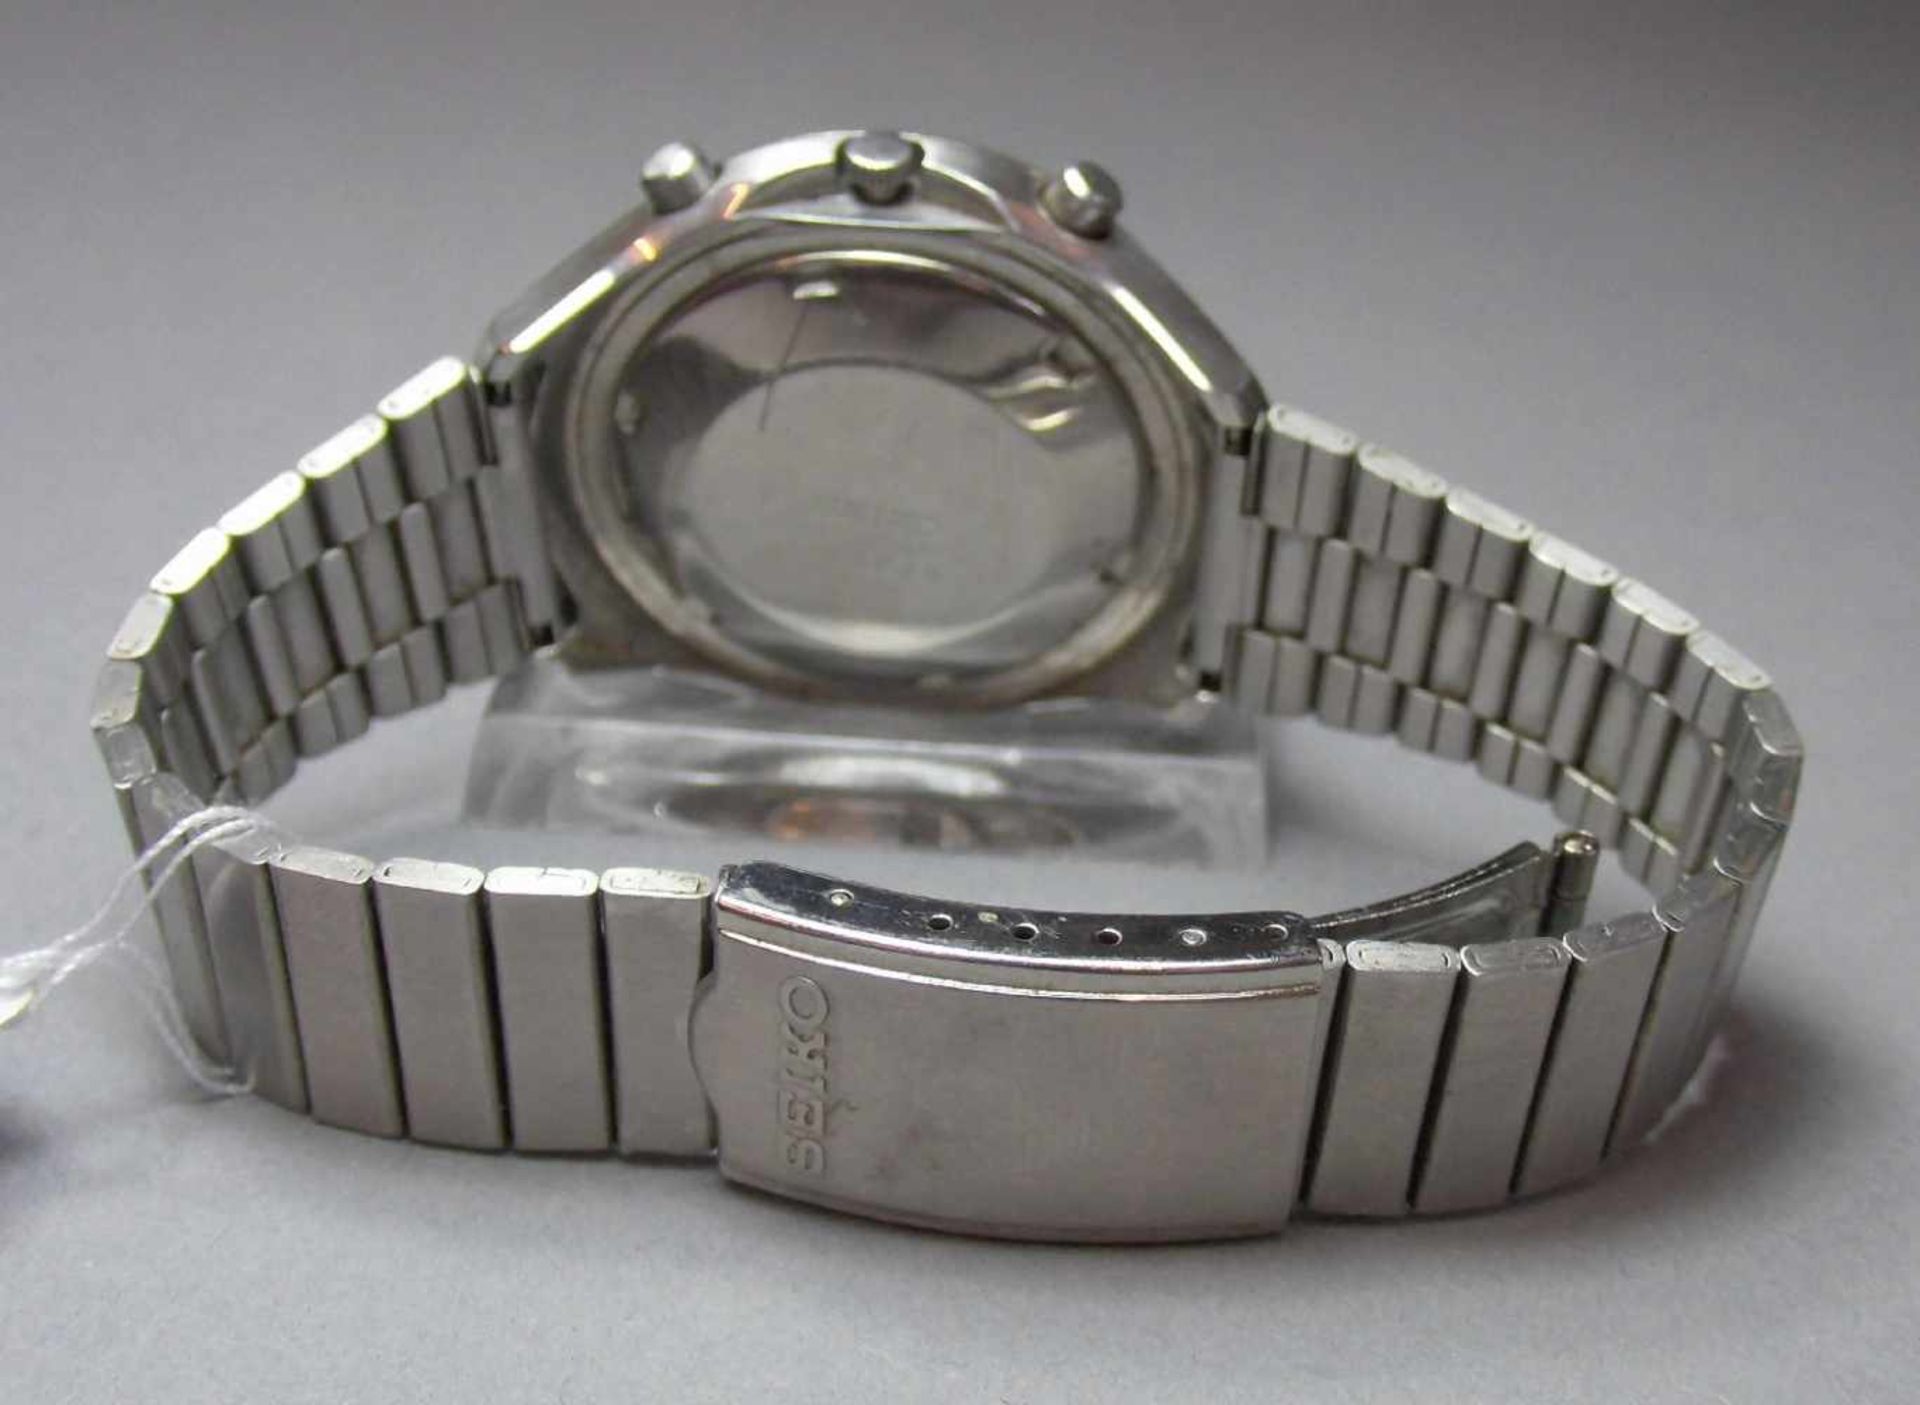 VINTAGE CHRONOGRAPH / ARMBANDUHR : SEIKO - 6139 - 7160 T / wristwatch, Japan, 1970er Jahre, - Image 7 of 8